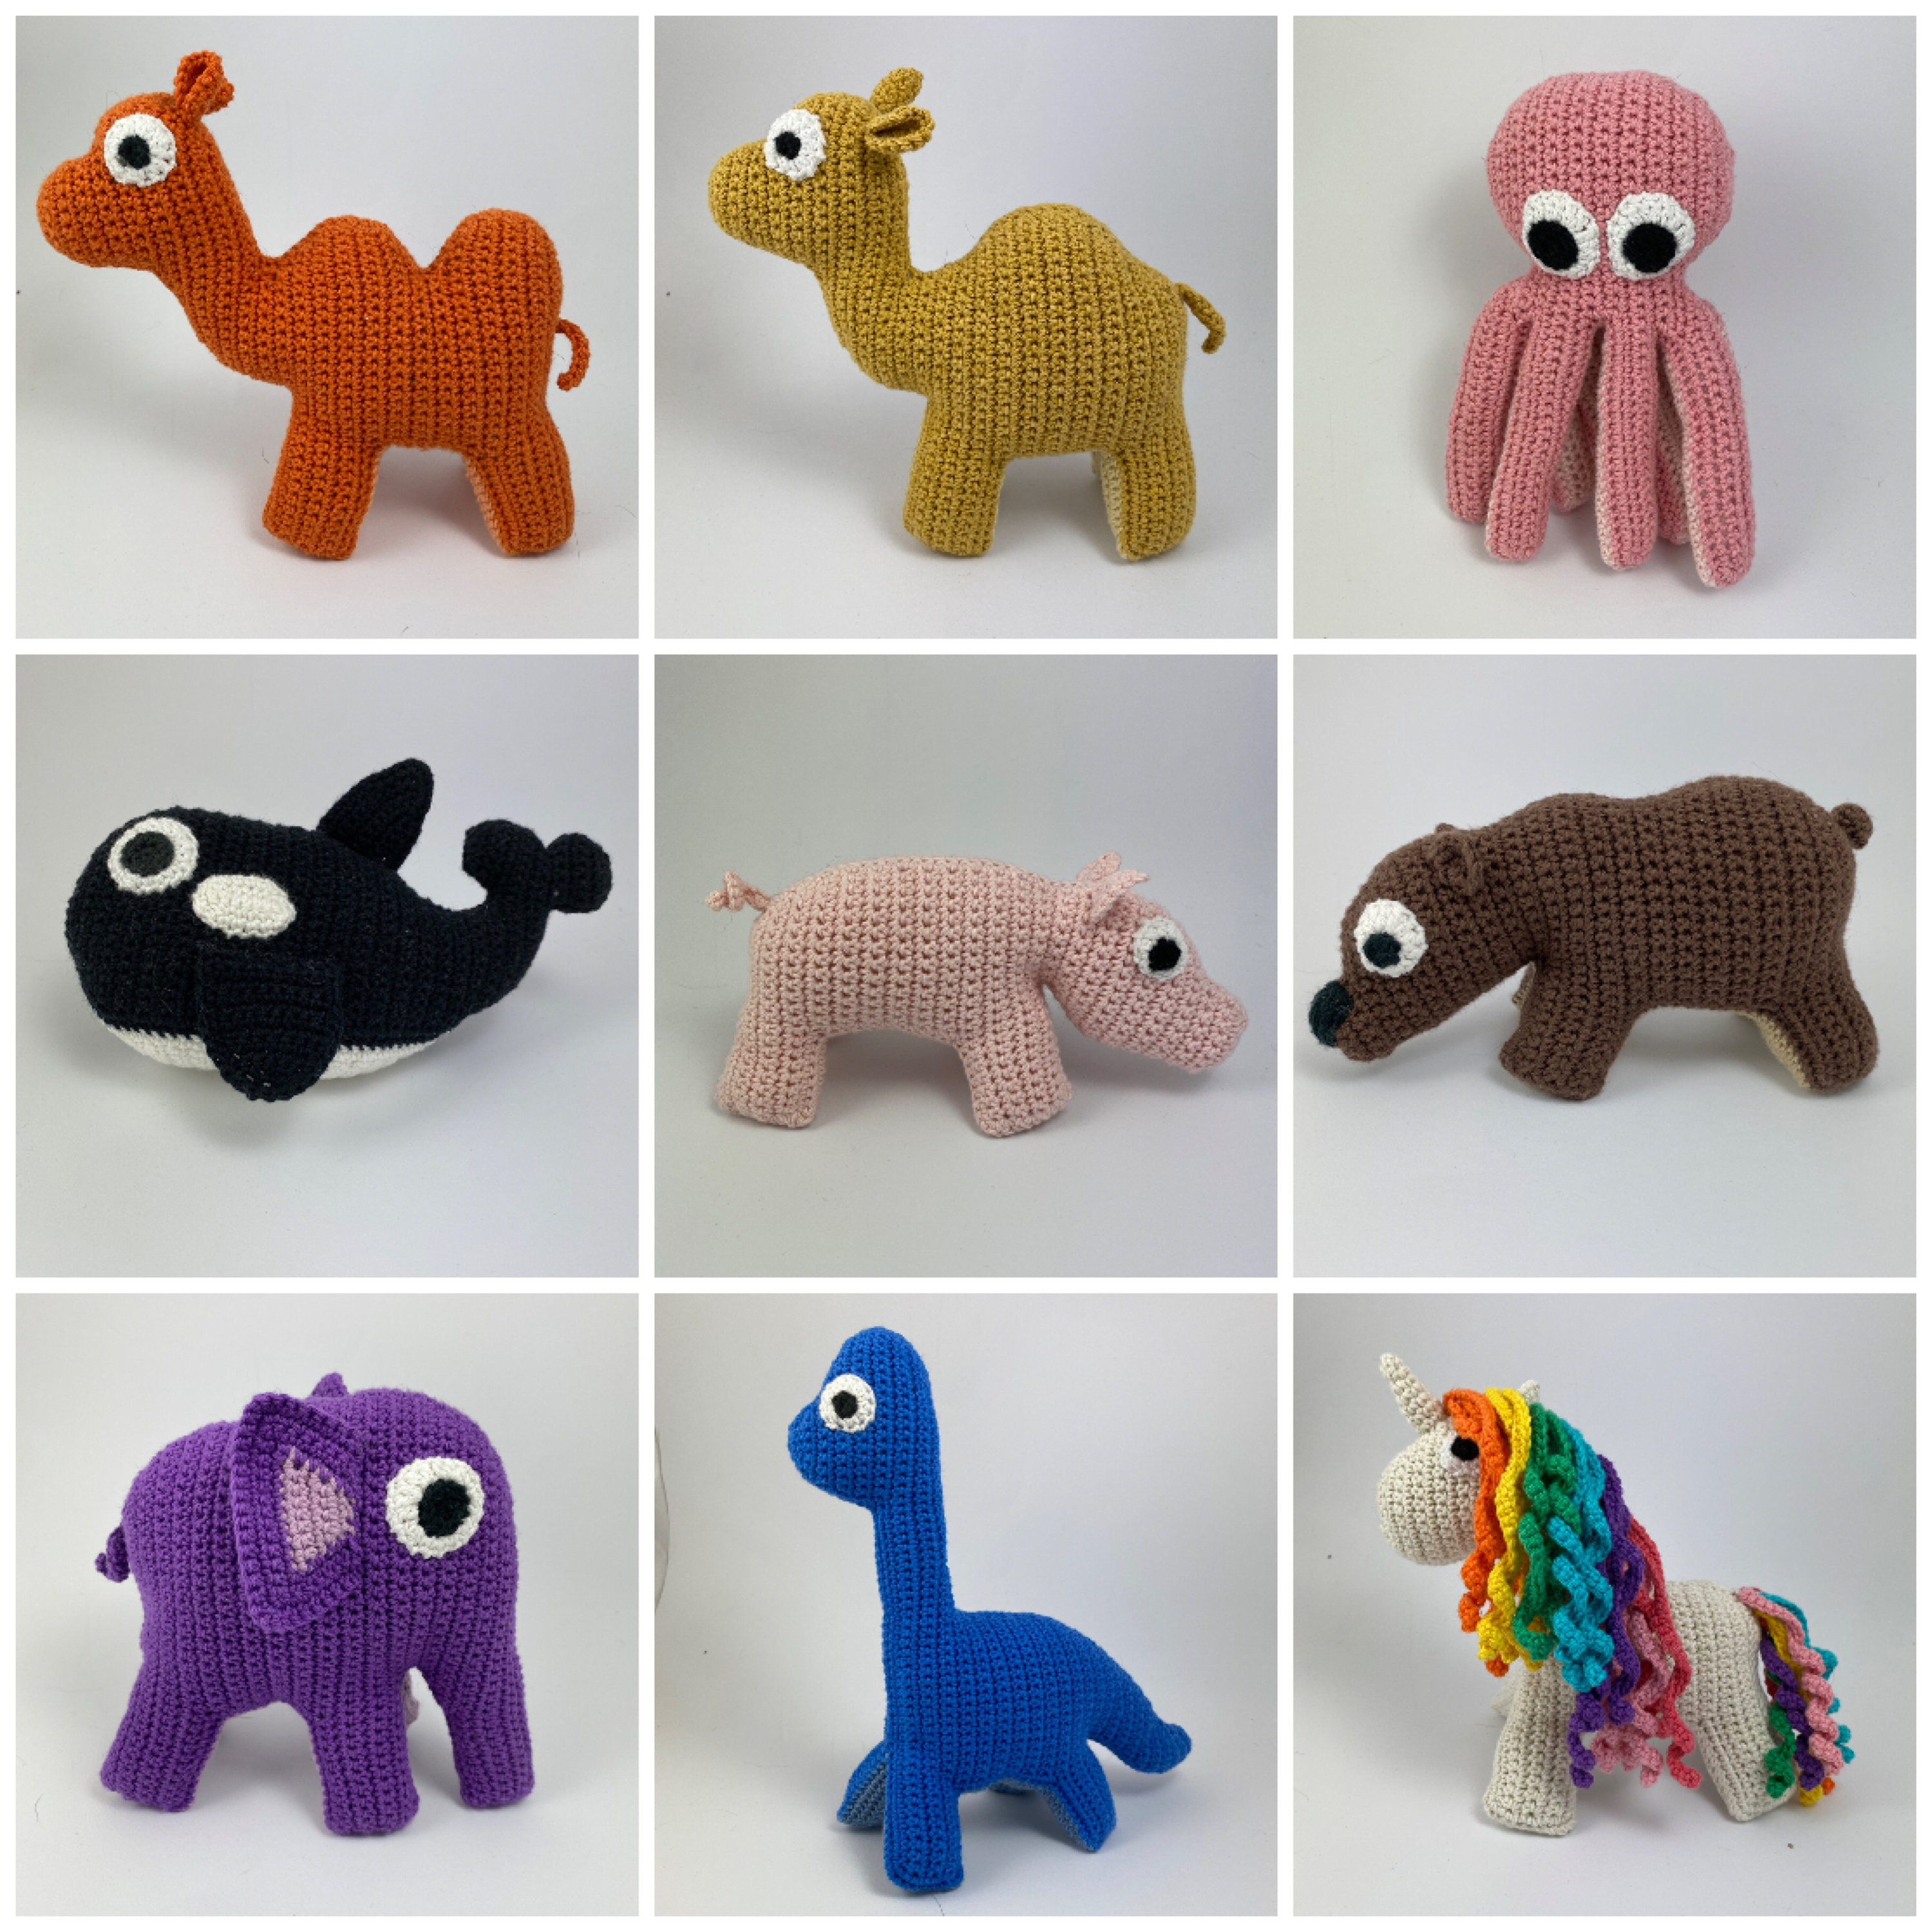 Amigurumi Crochet Pattern Bundle, Horse, Elephant, Unicorn, Zebra